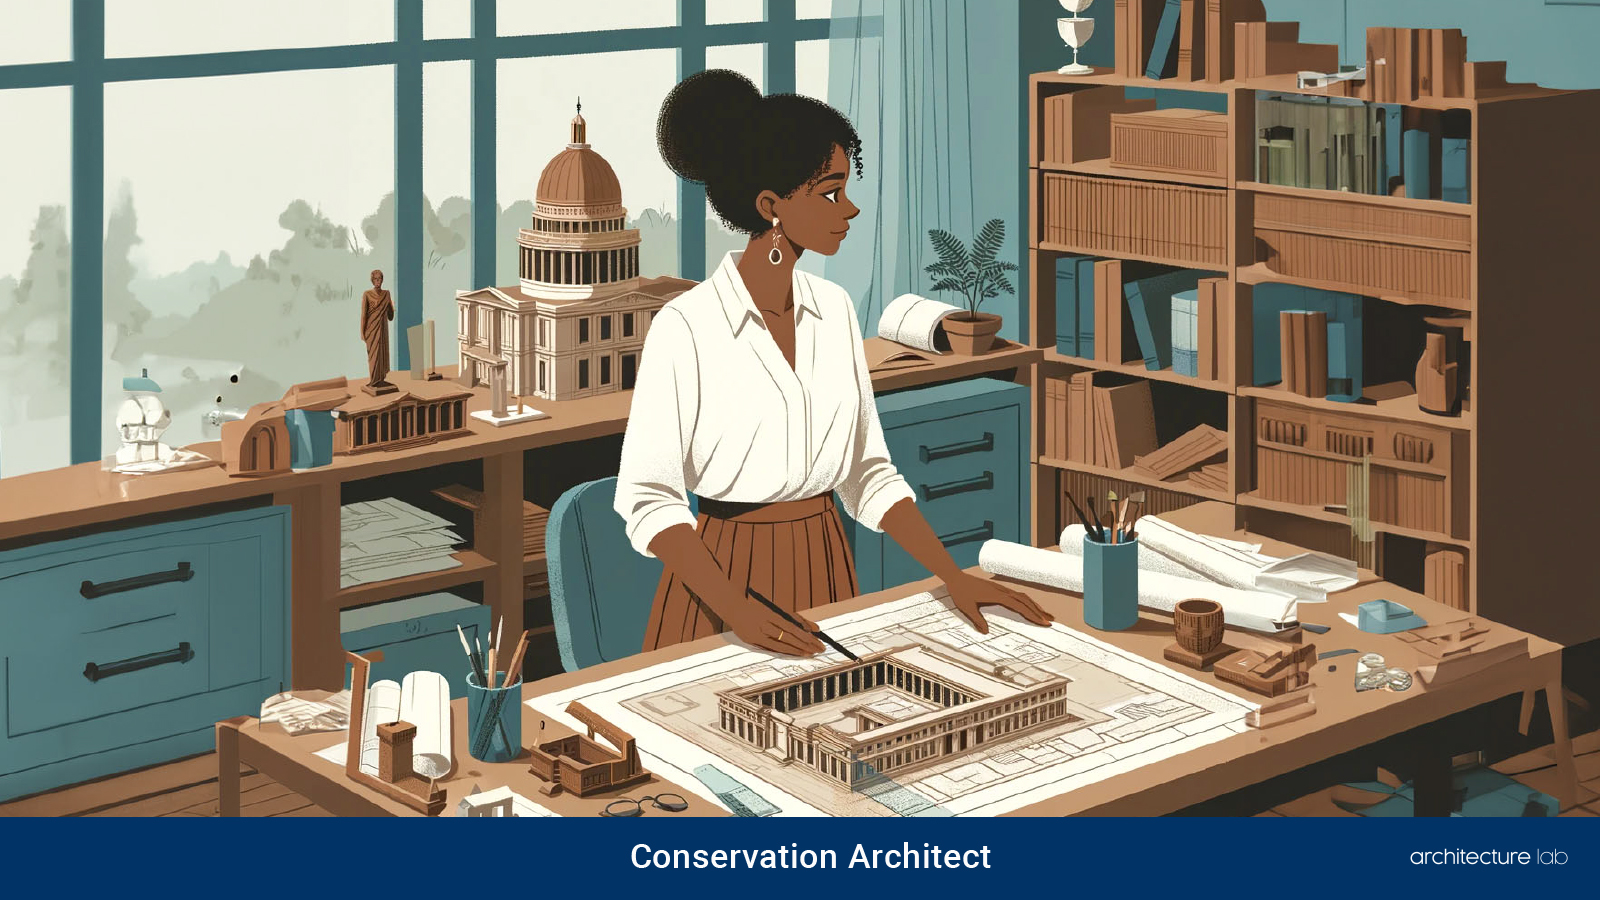 Conservation architect